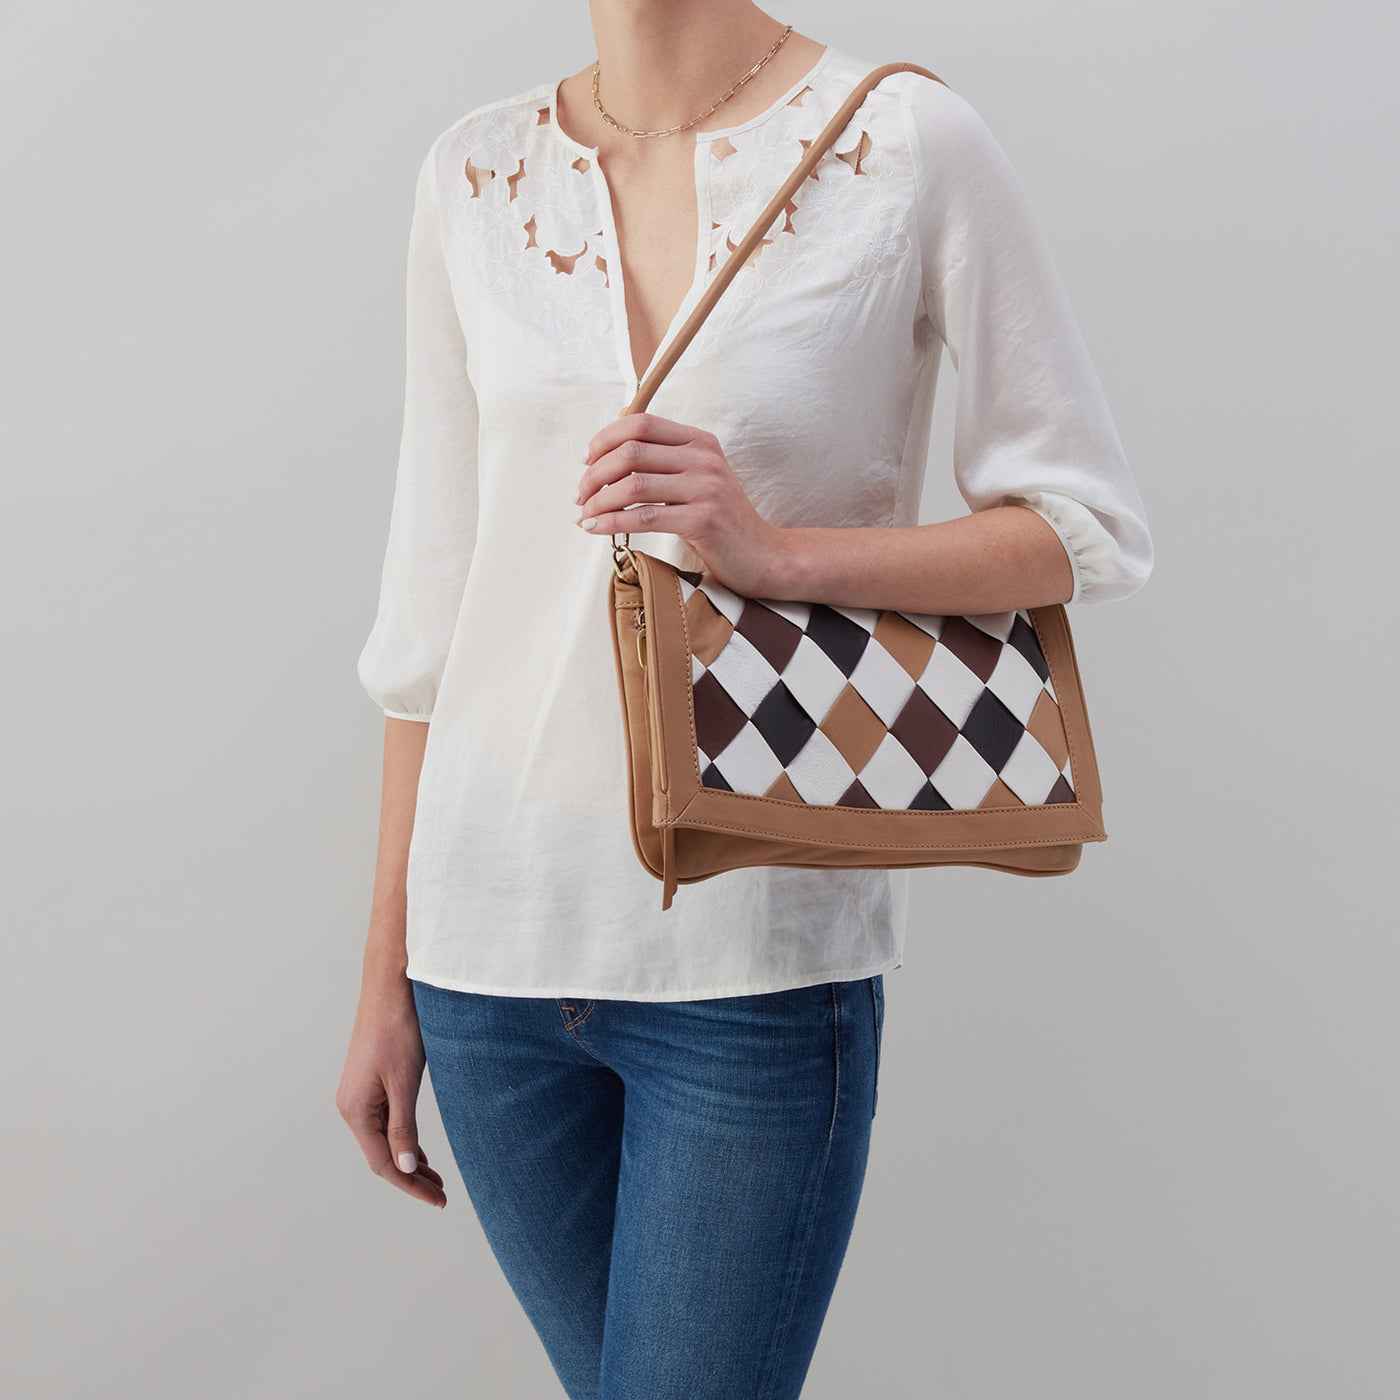 Farah Shoulder Bag in Soft Leather - Checkerboard Multi